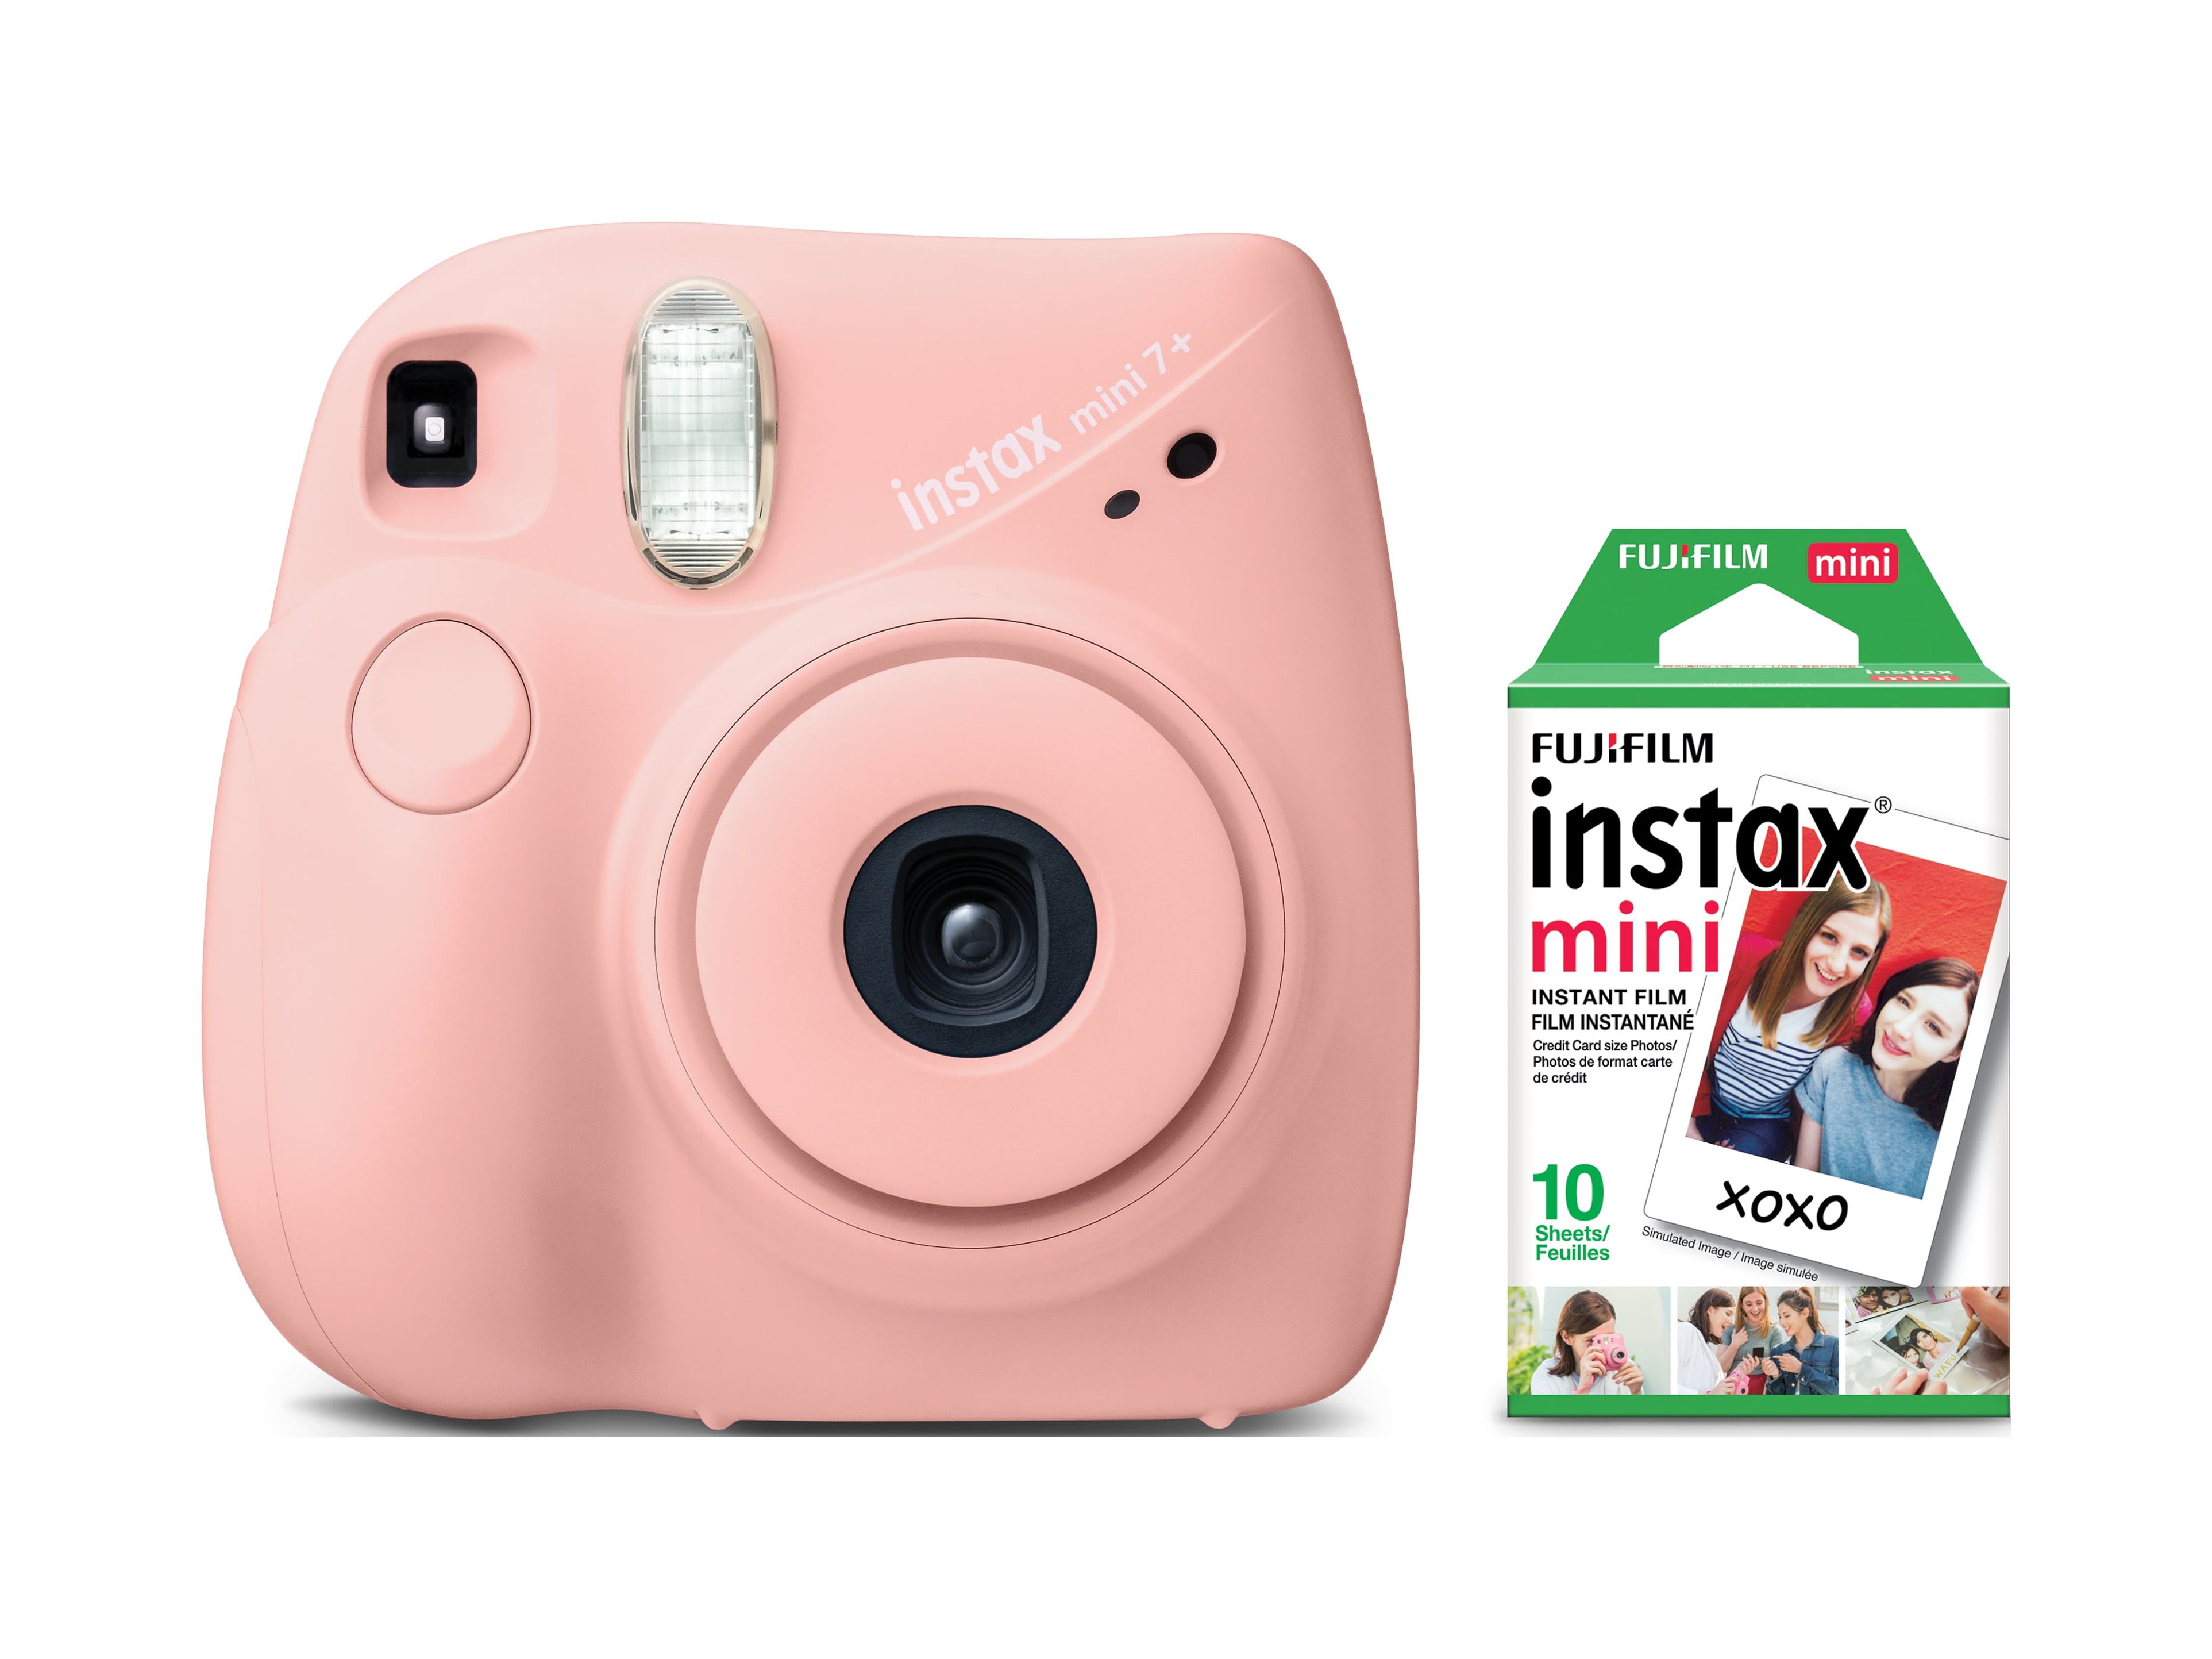 Fujifilm Instax Mini 7+ Exclusive Blister Bundle with Bonus Film (10-pack Mini Film), Light Pink - image 1 of 9